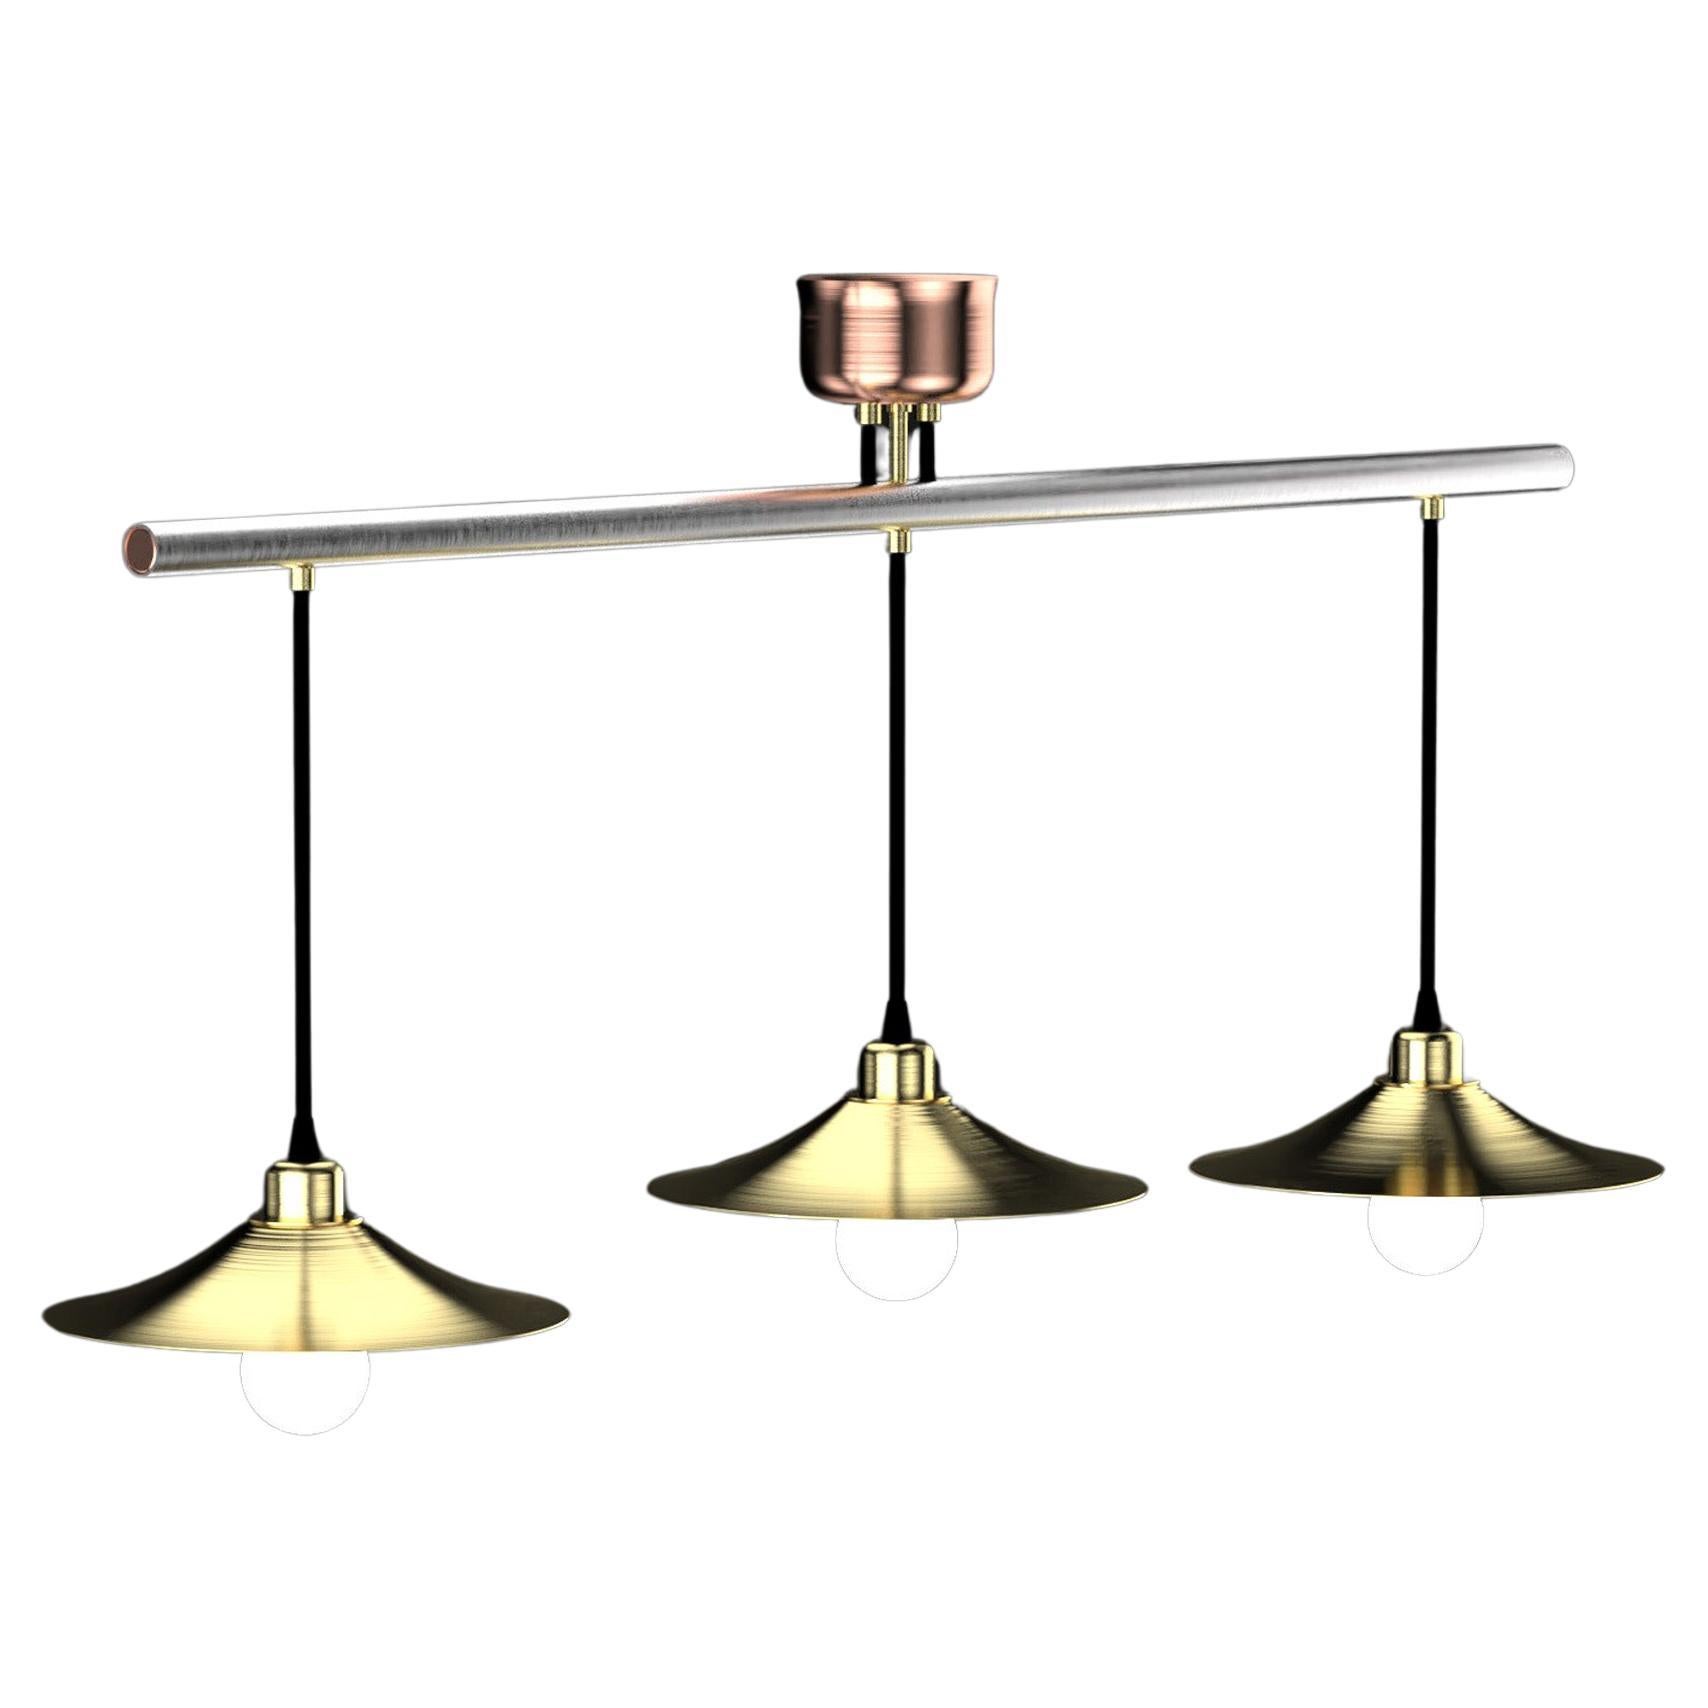 Edimate Genuine Stainless Steel/Brass Ceiling Light For Sale